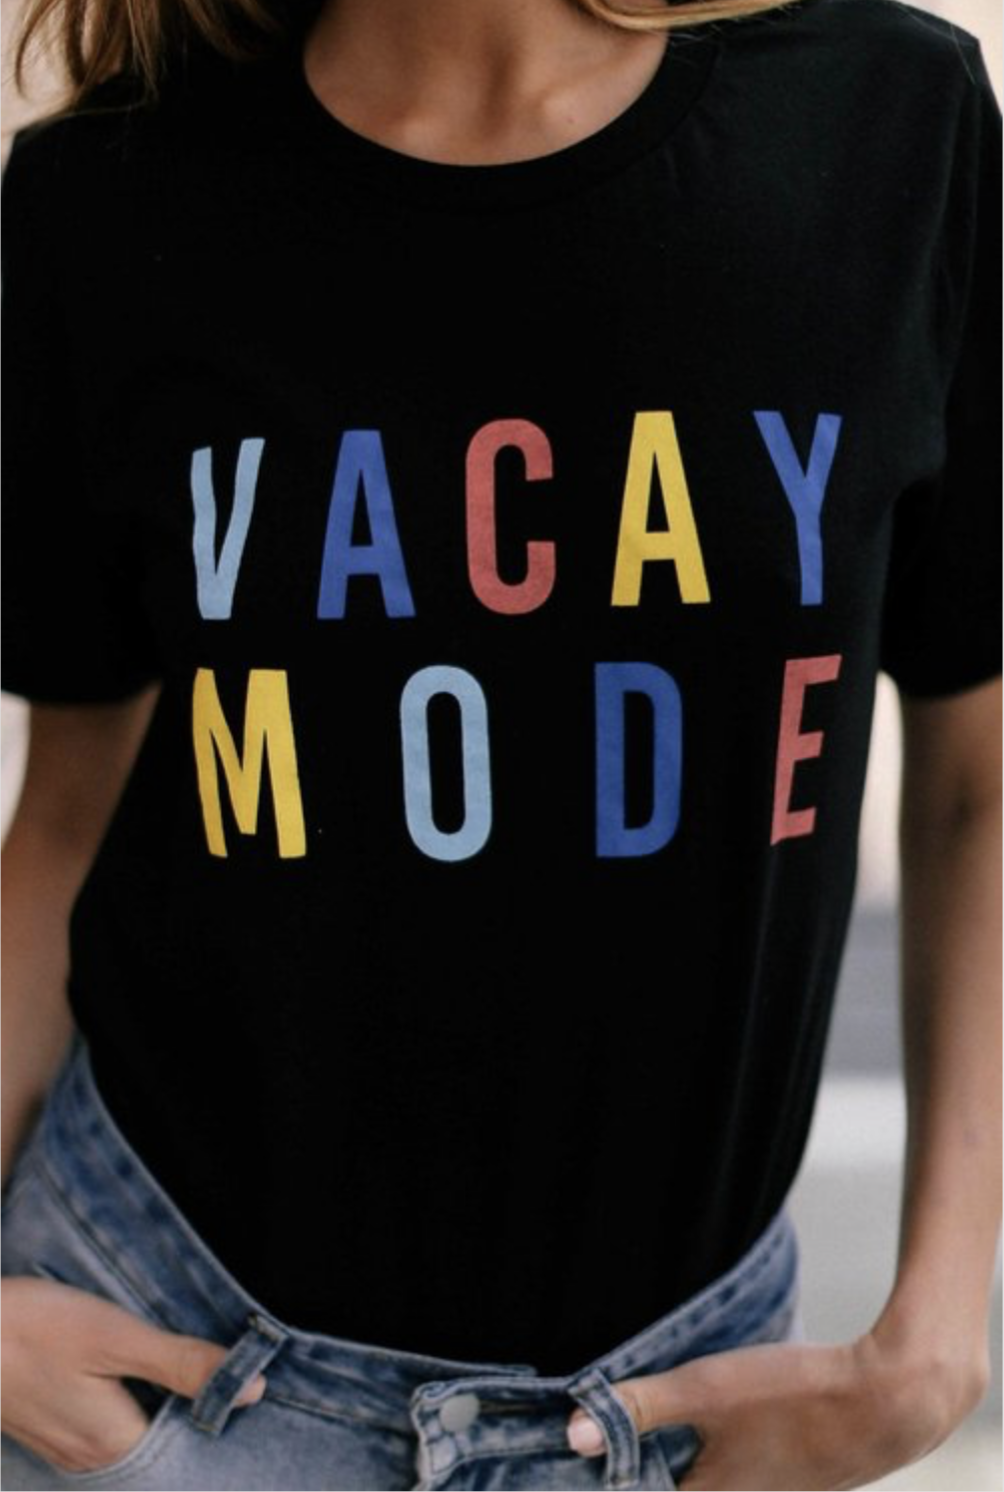 Vacay Mode Shirt